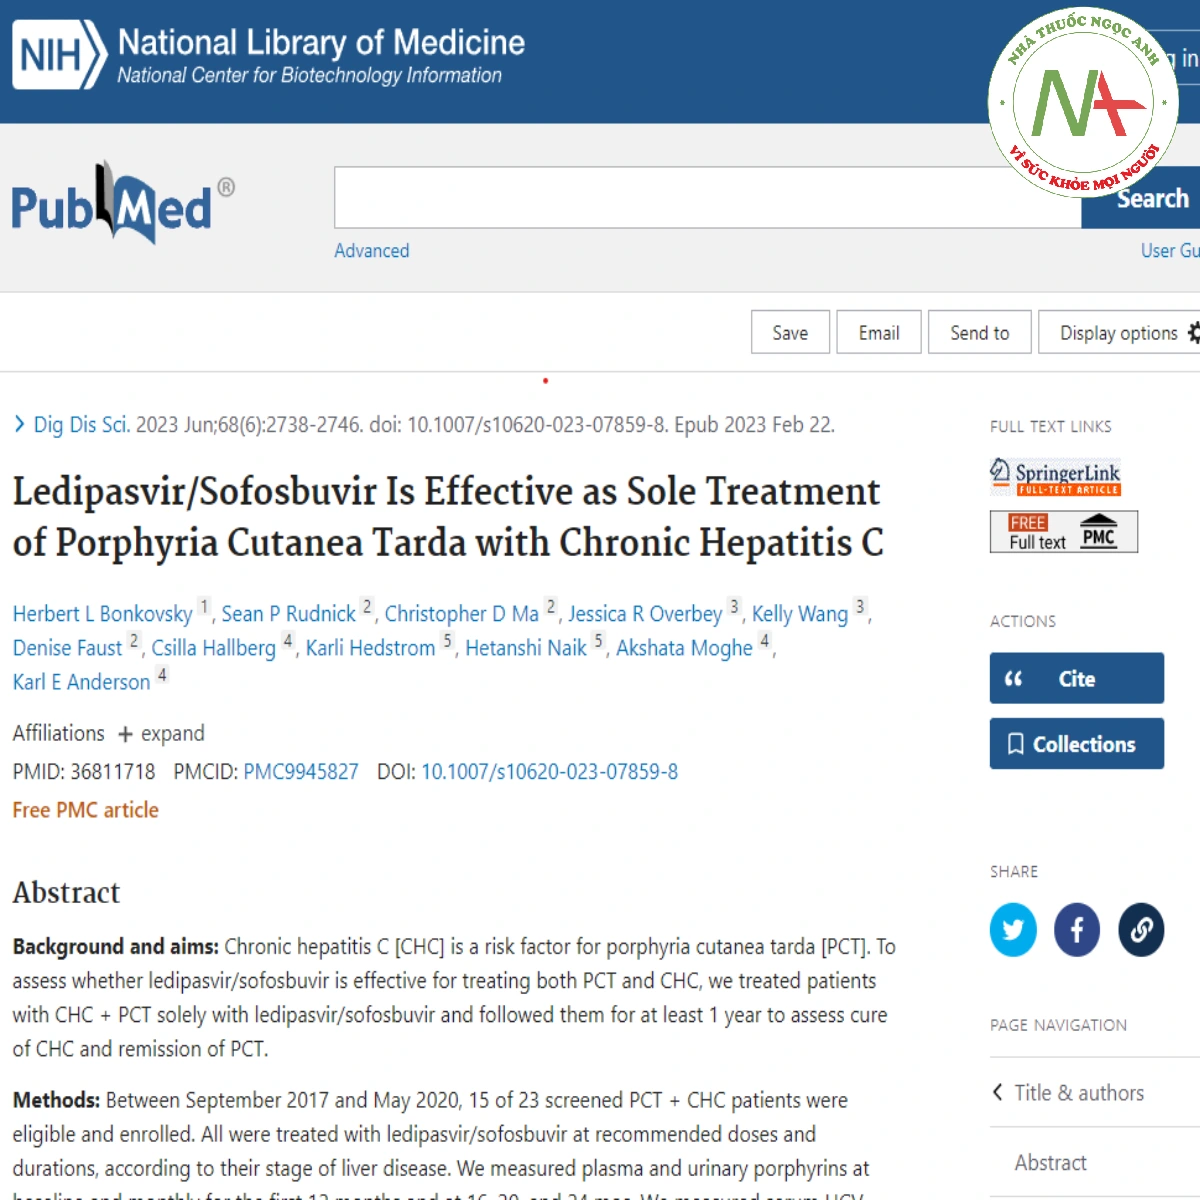 Ledipasvir/Sofosbuvir Is Effective as Sole Treatment of Porphyria Cutanea Tarda with Chronic Hepatitis C